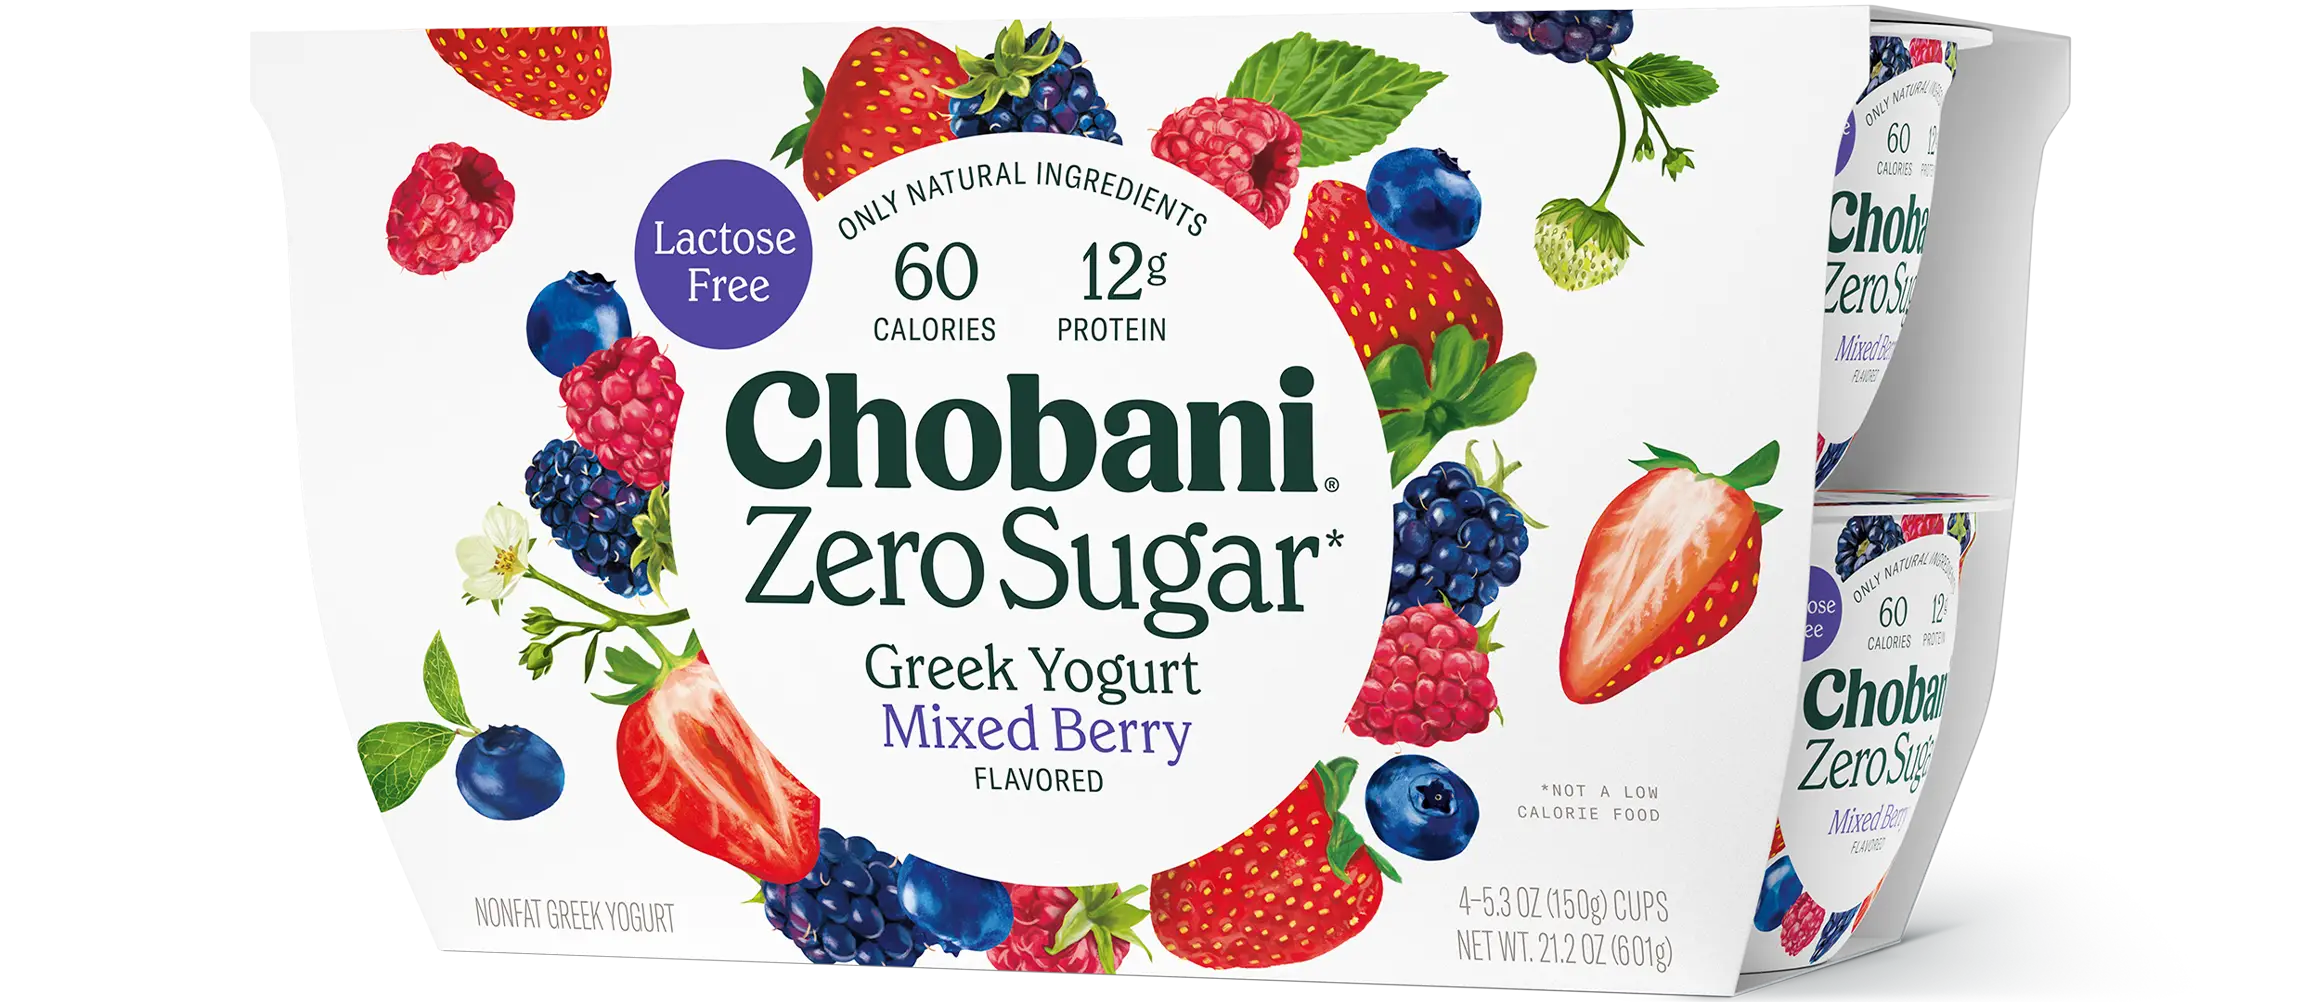 Zero Sugar*  Mixed Berry